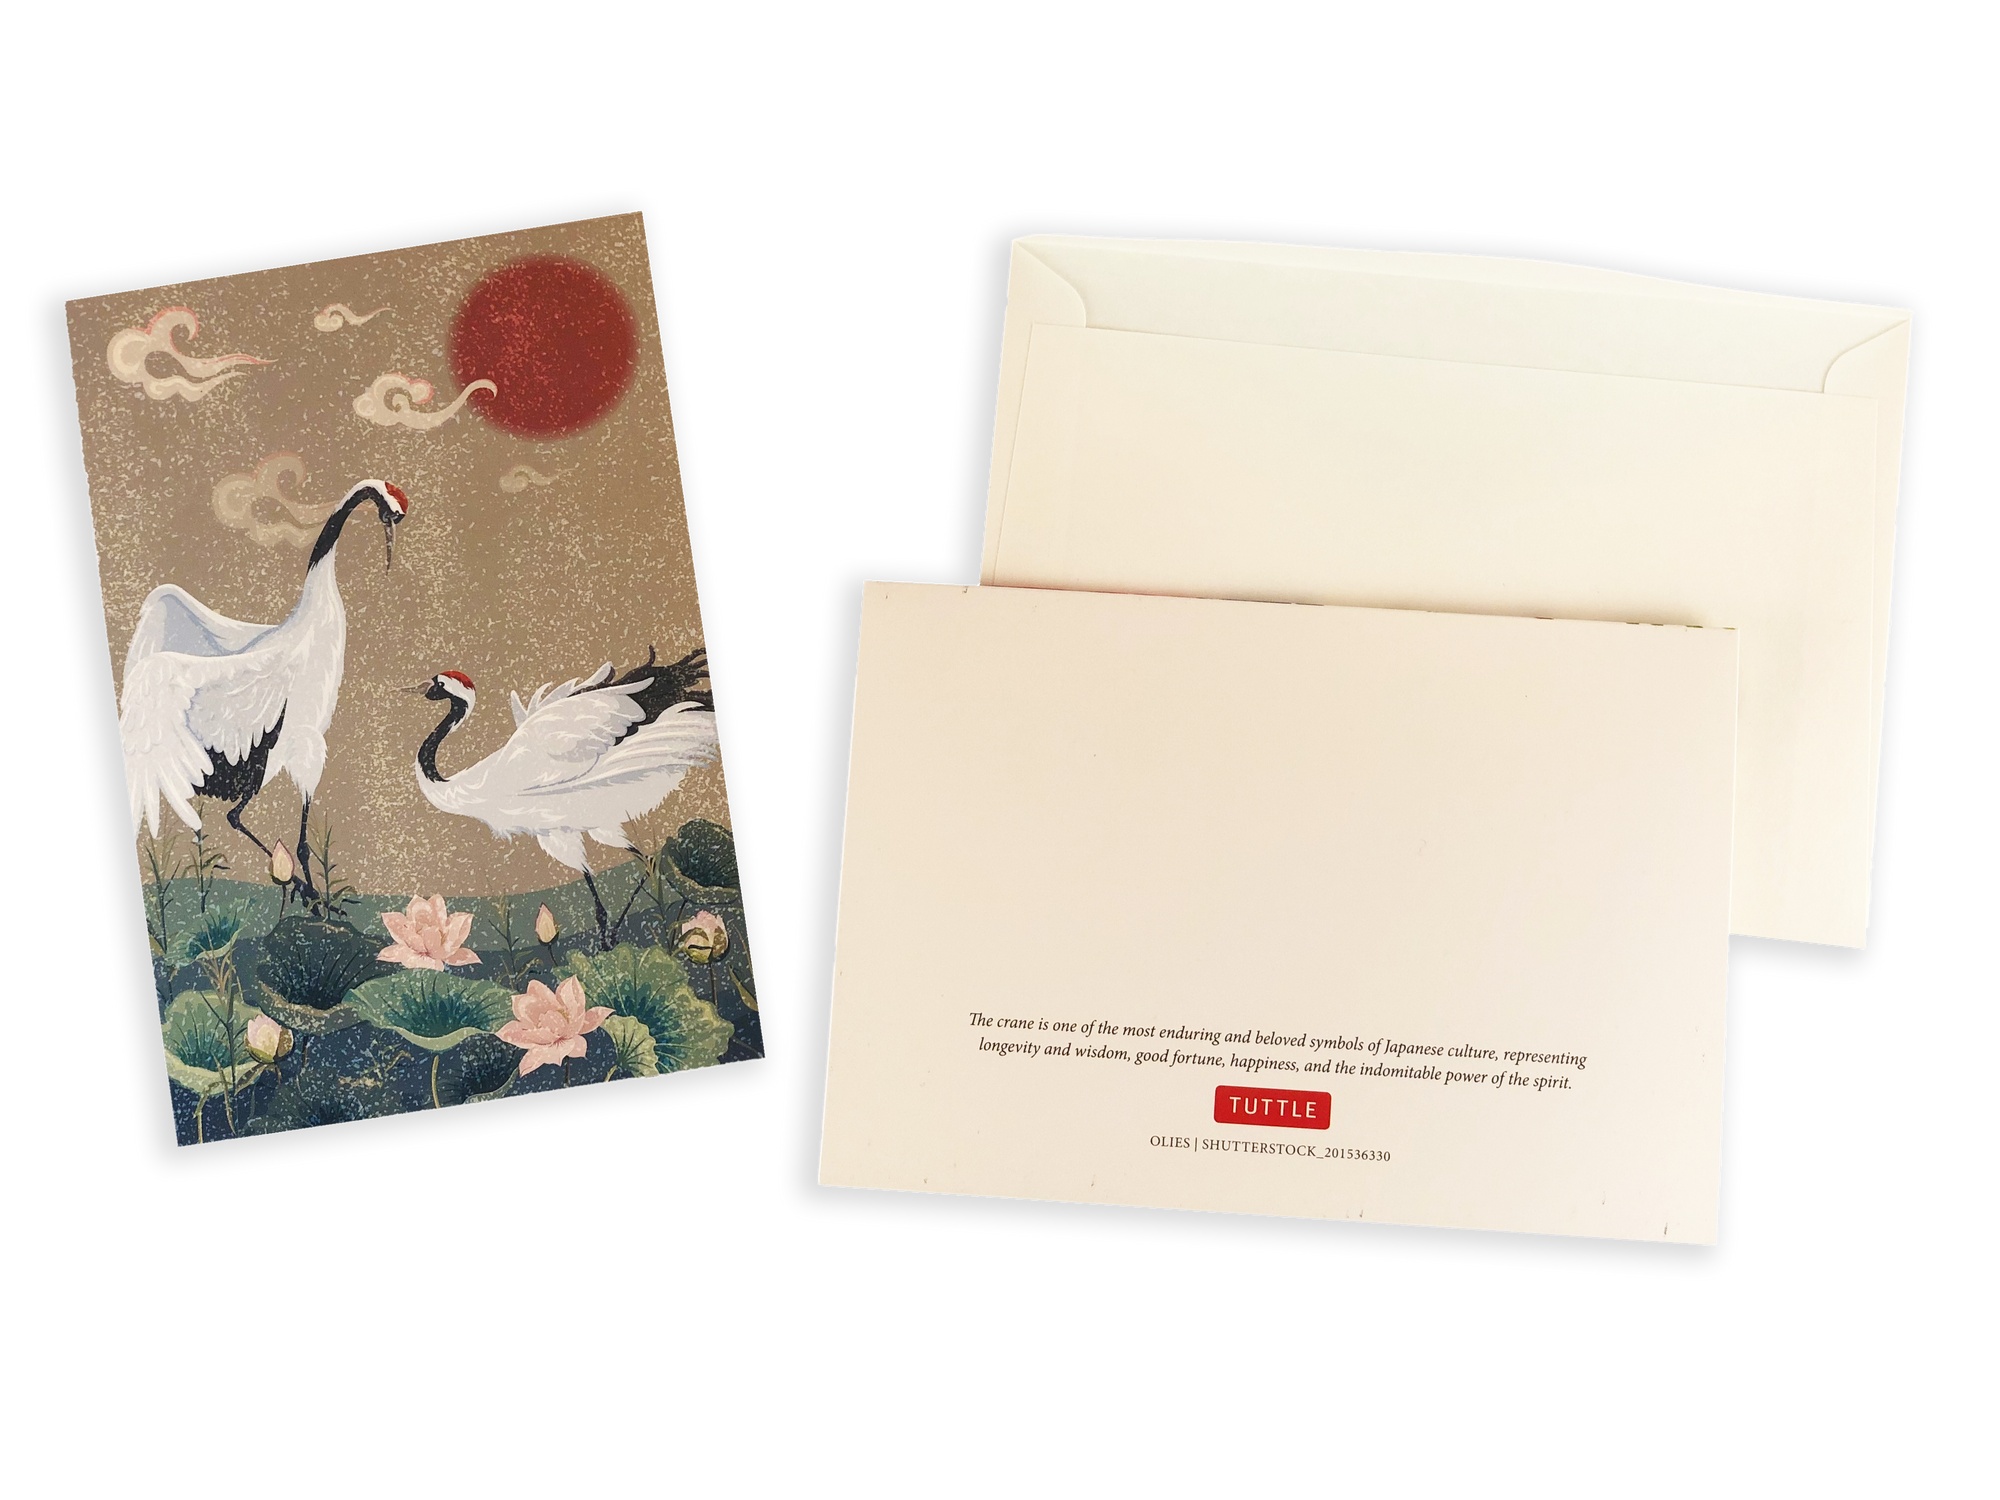 Japanese Cranes Note Cards (9780804851640) - Tuttle Publishing